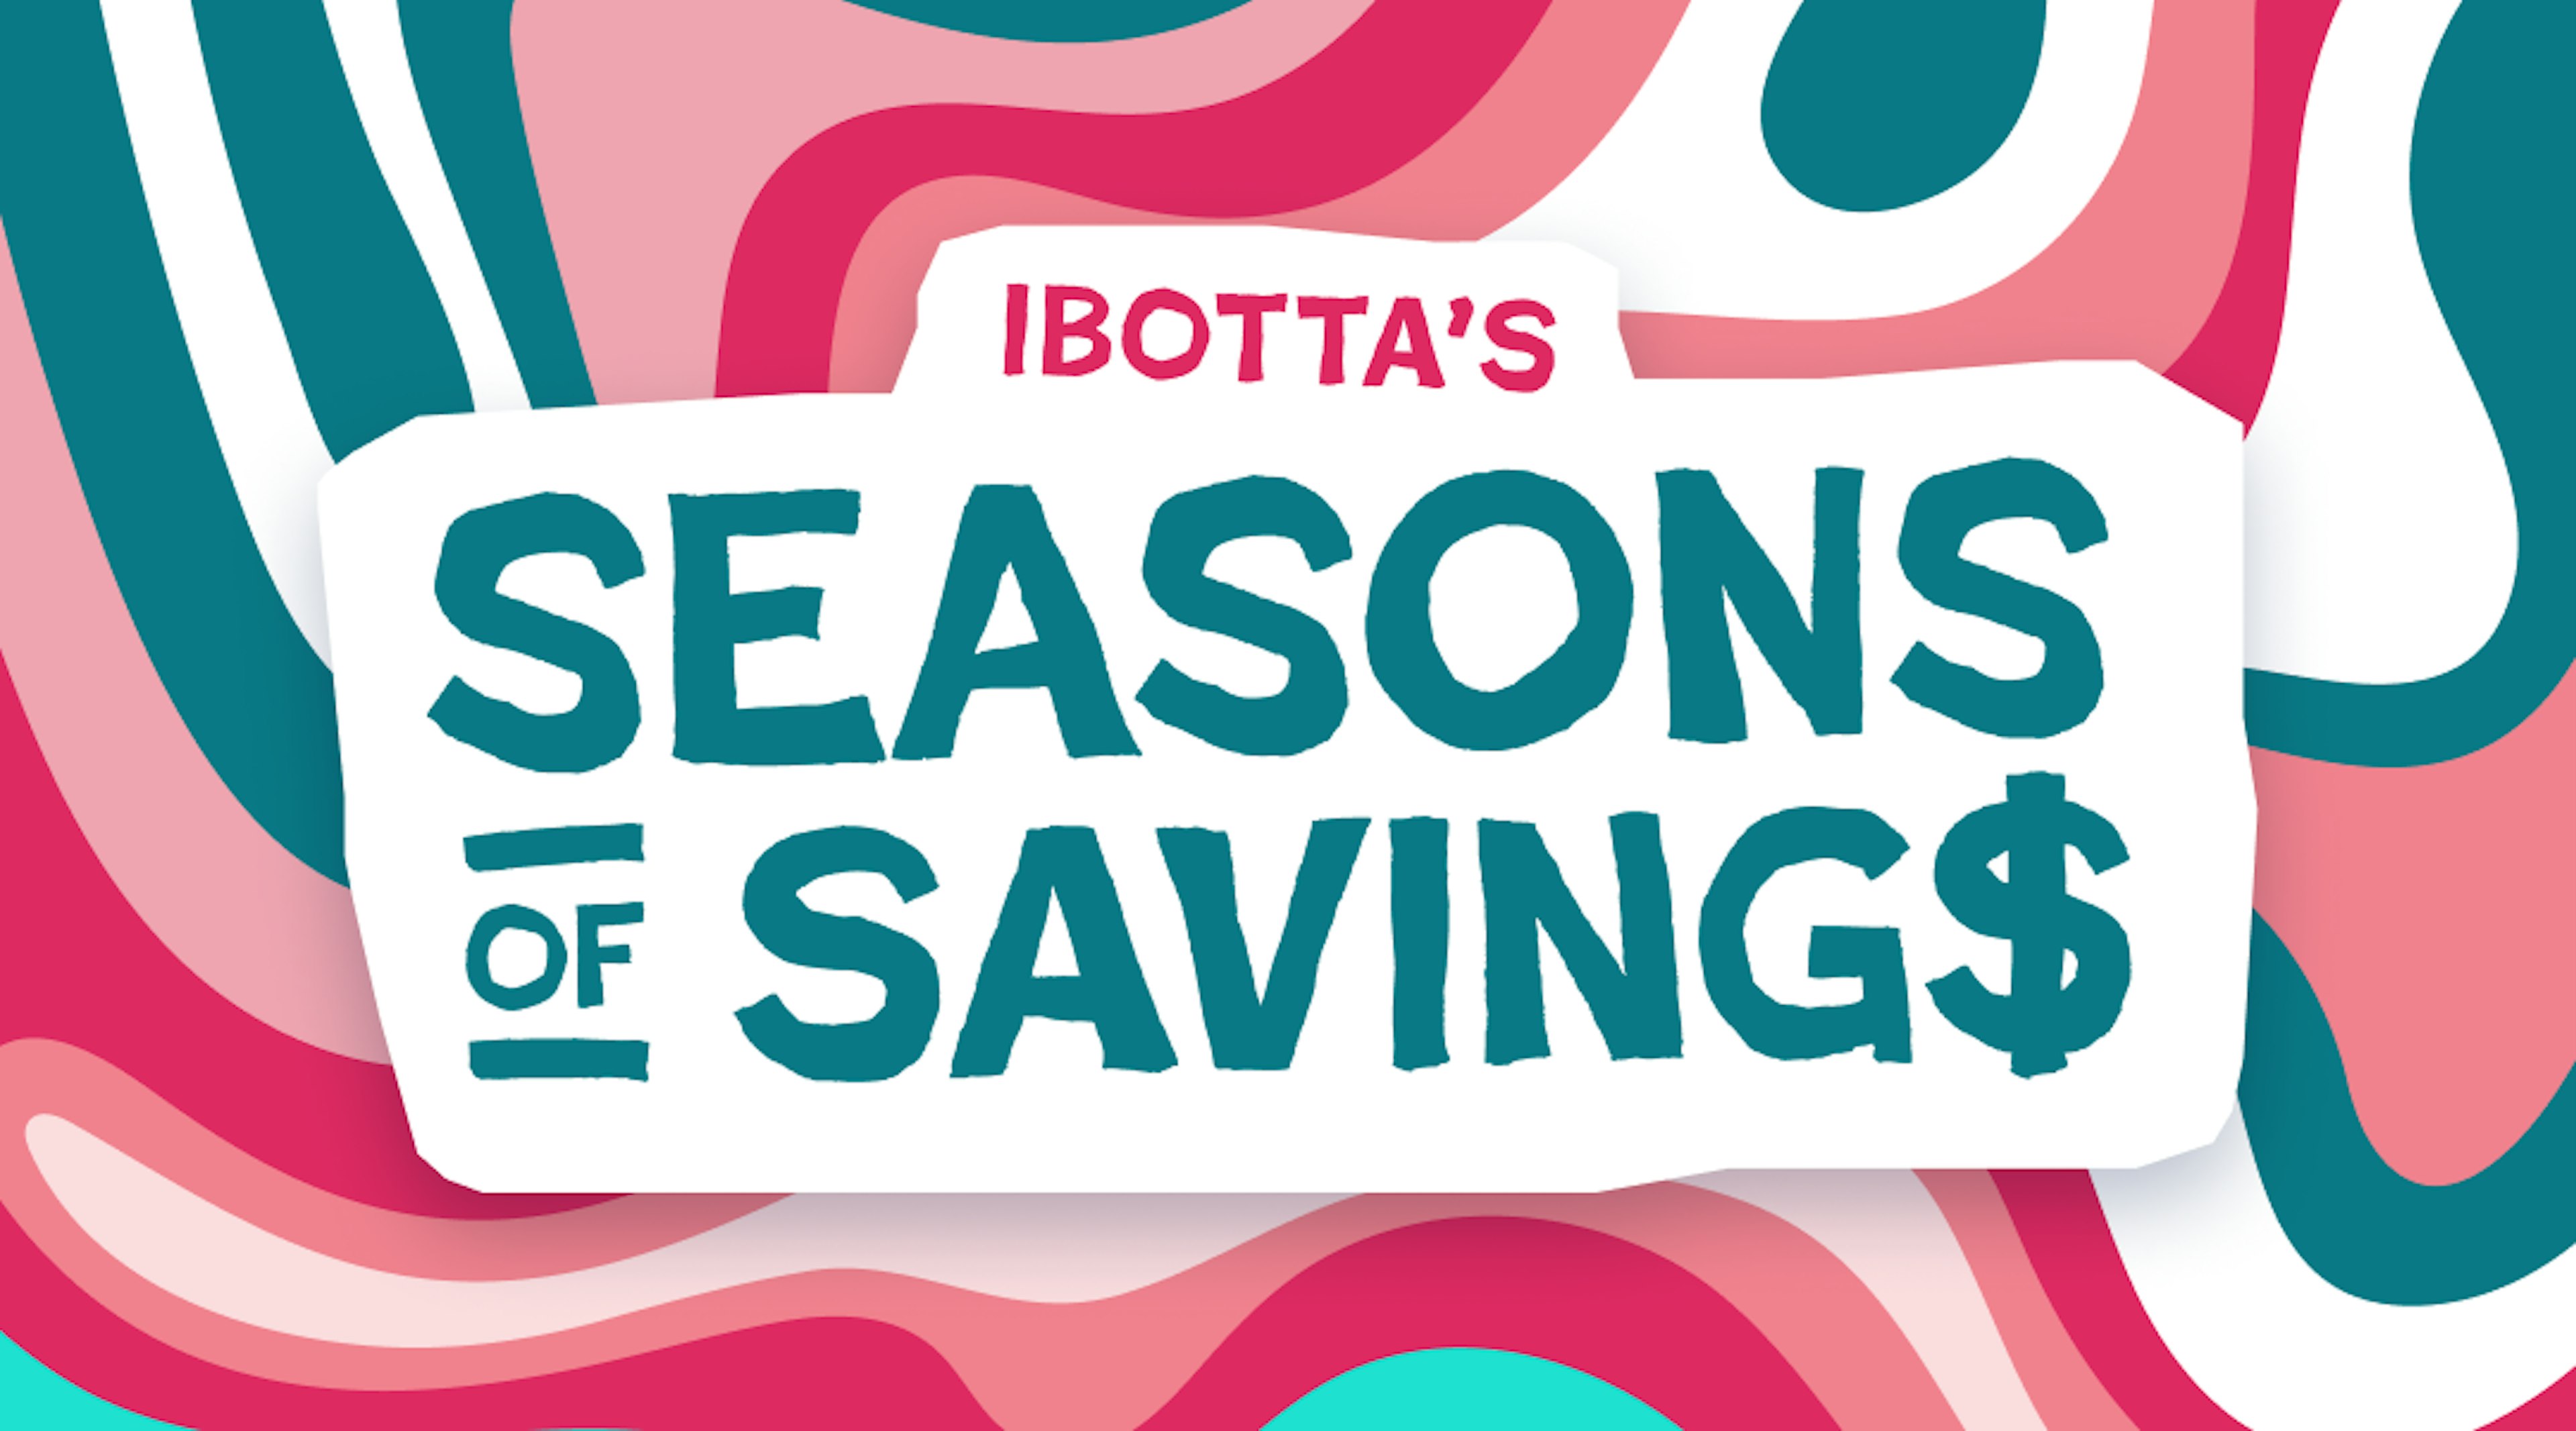 Ibotta BlogImage SeasonsOfSavings 032123 v01a